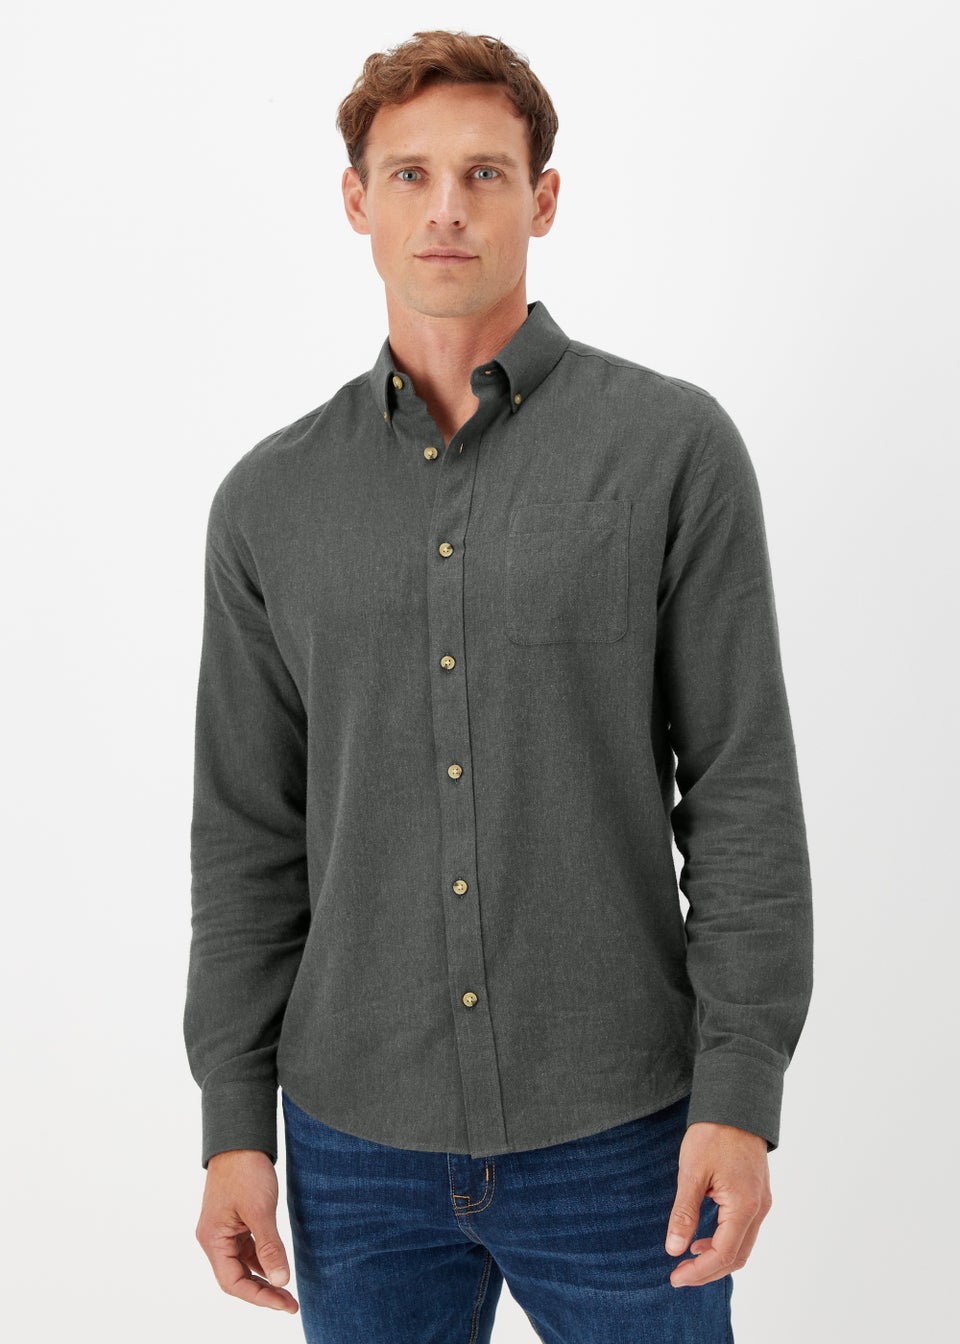 Khaki Twill Long Sleeve Shirt